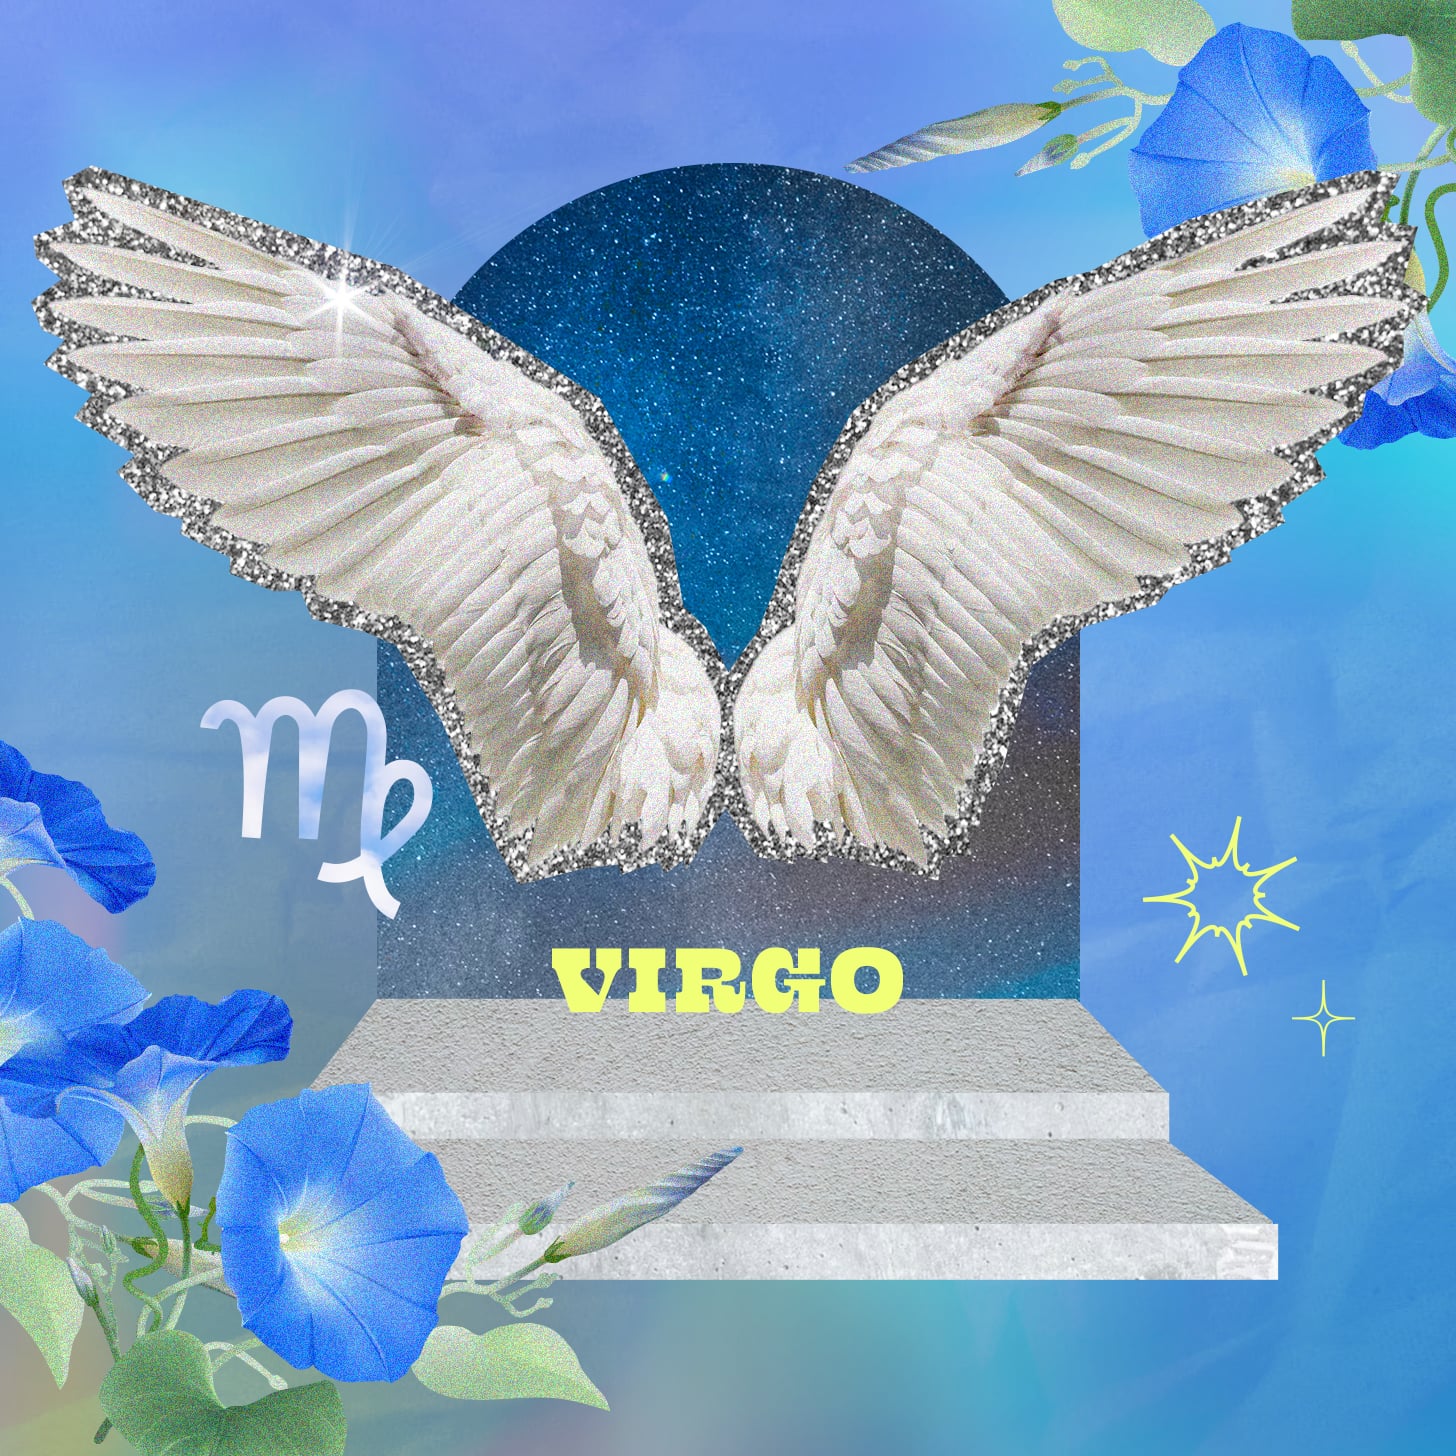 Virgo weekly horoscope for May 22